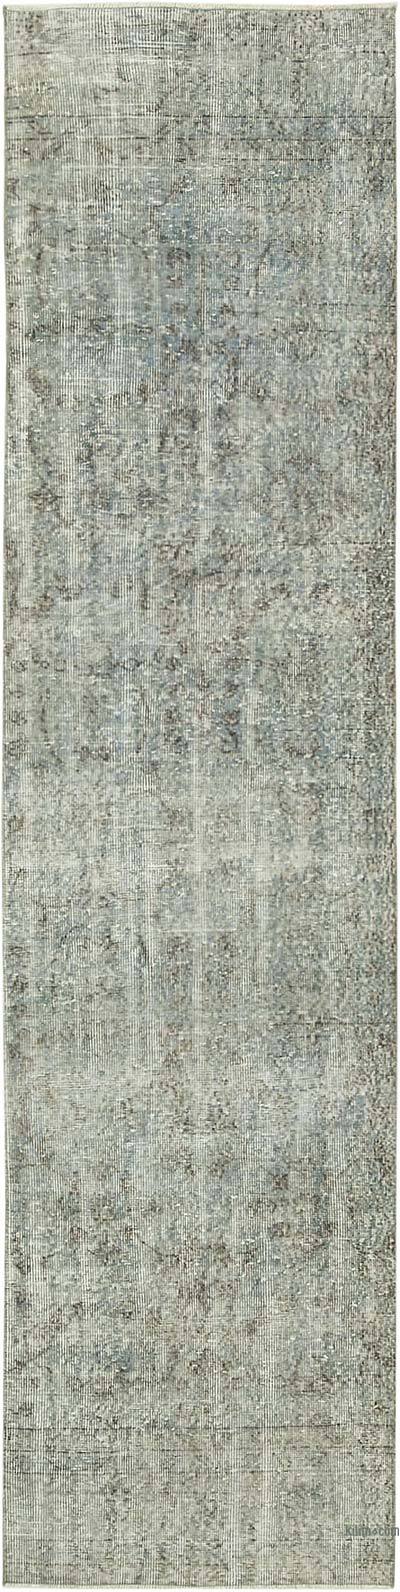 Lacivert Boyalı El Dokuma Vintage Halı Yolluk - 77 cm x 310 cm